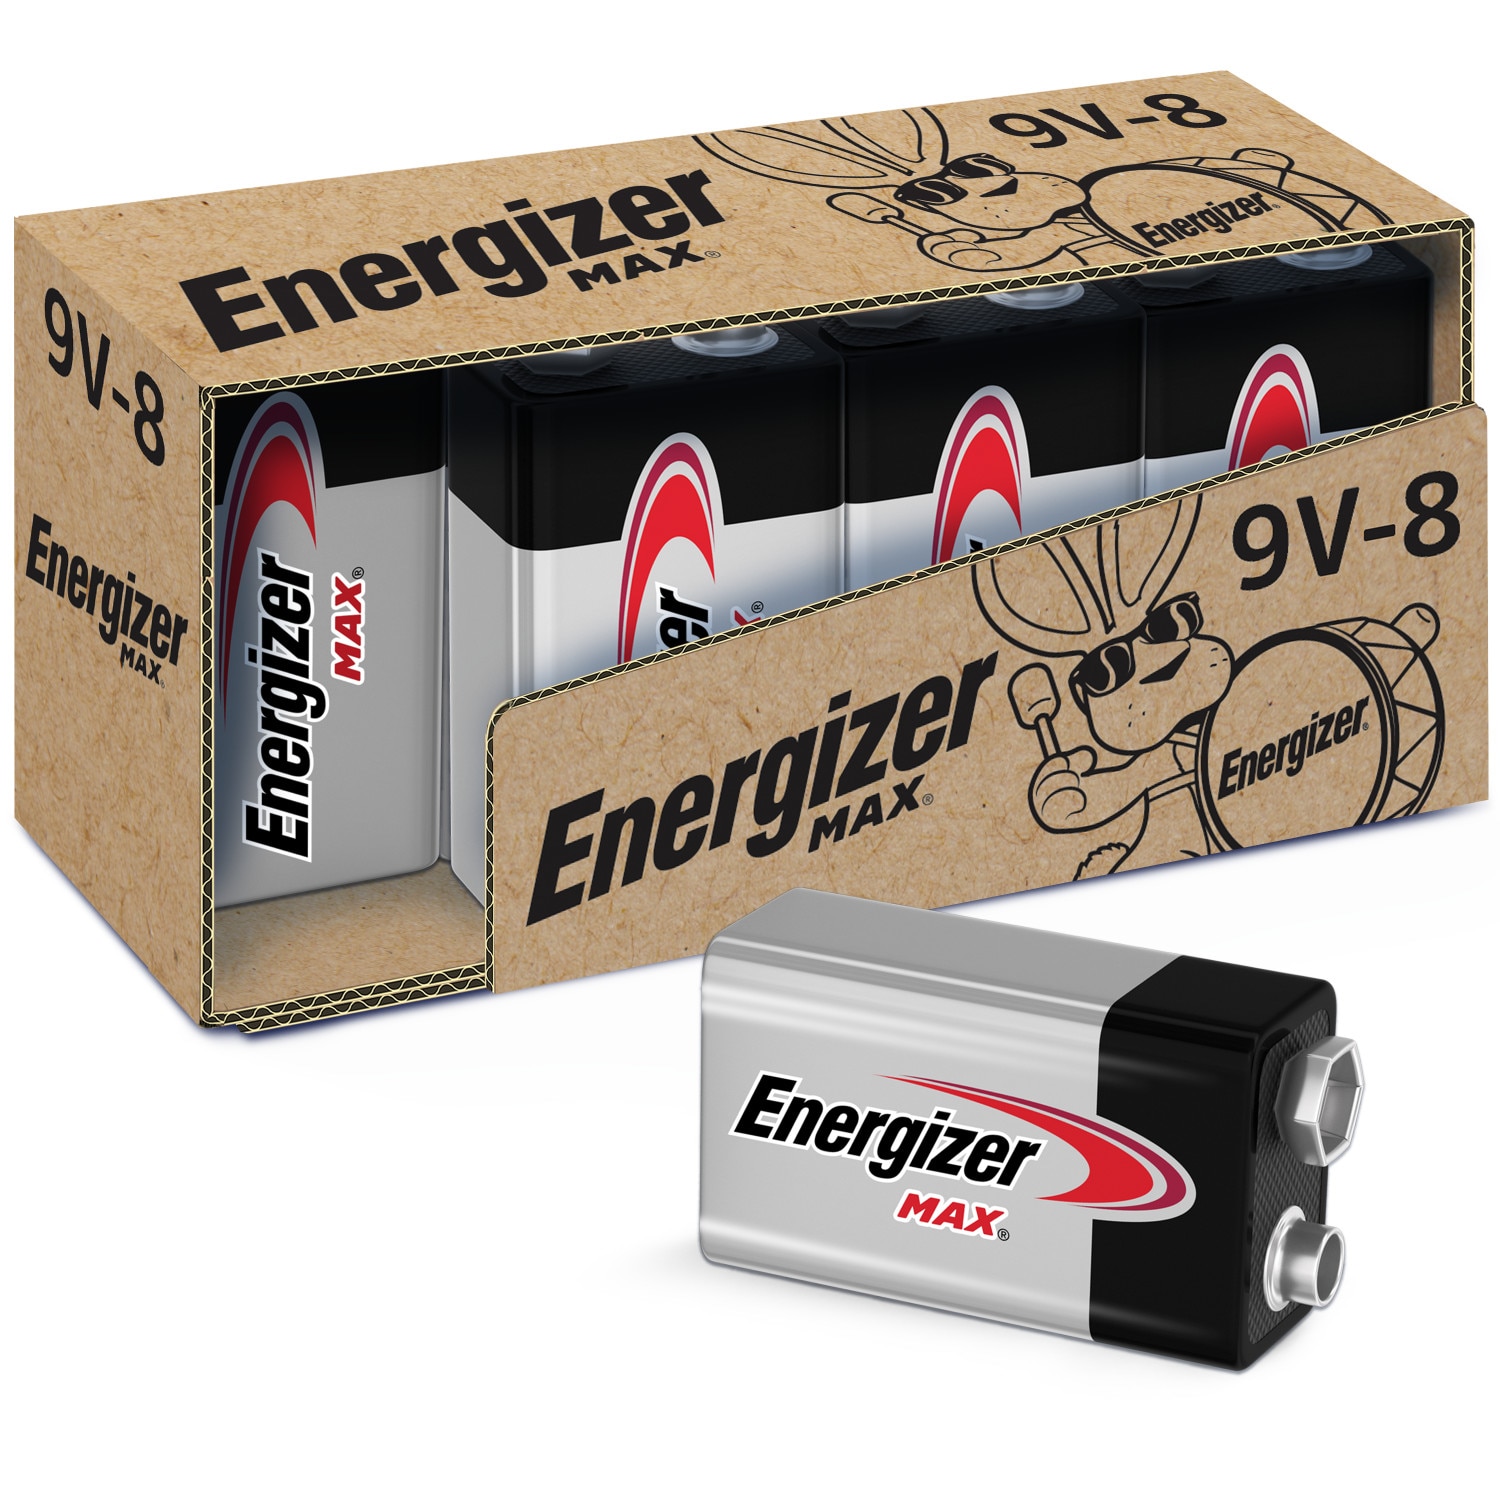 Energizer Lithium 9V Batteries (1 Pack), Lithium 9 Volt Batteries